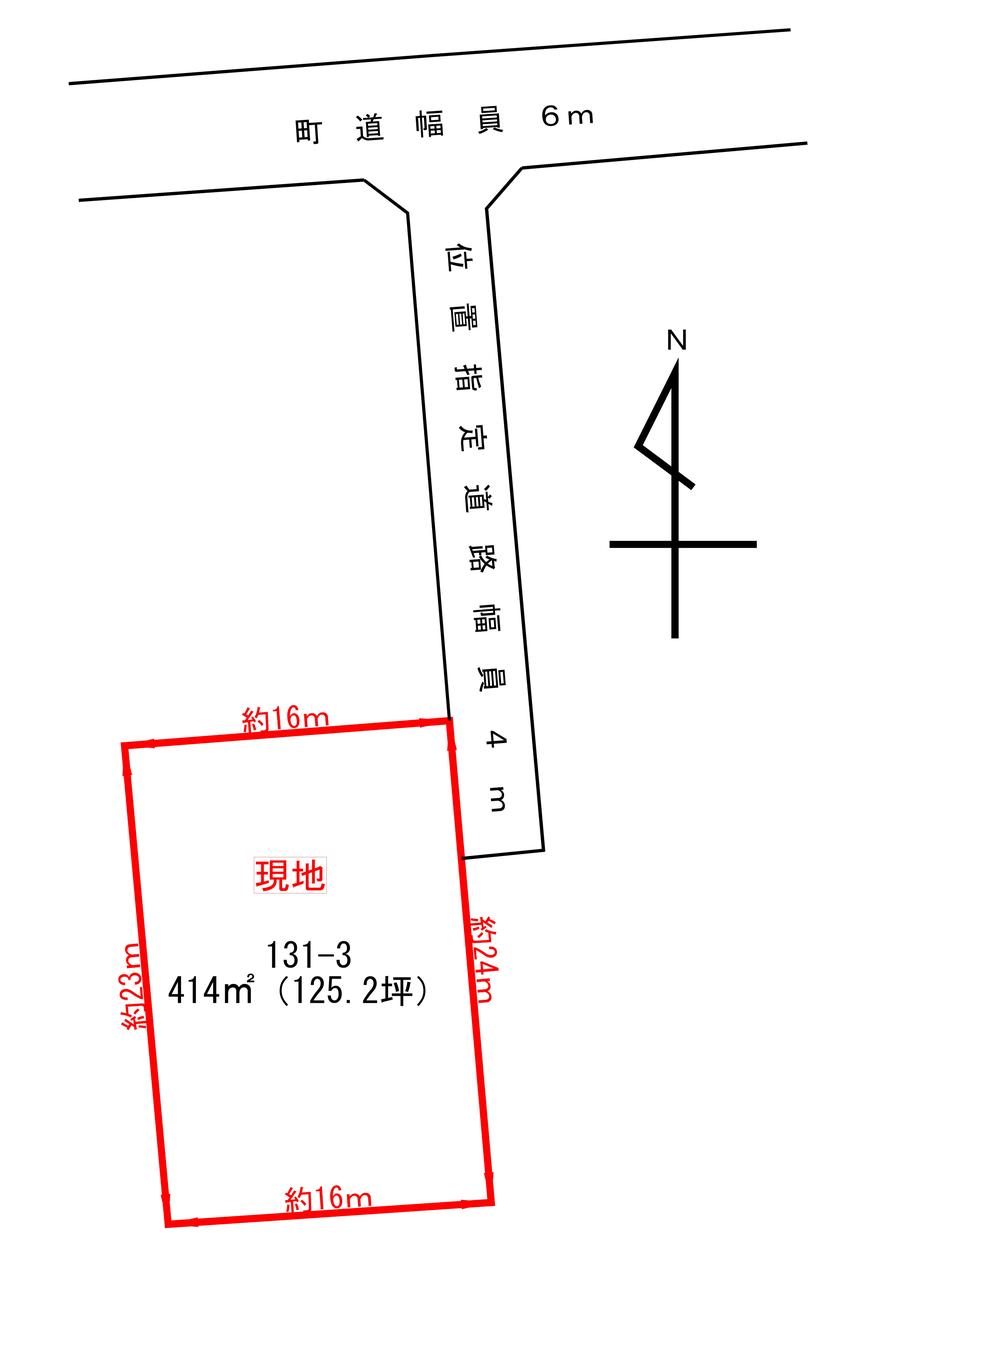 Compartment figure. Land price 15 million yen, Land area 414 sq m